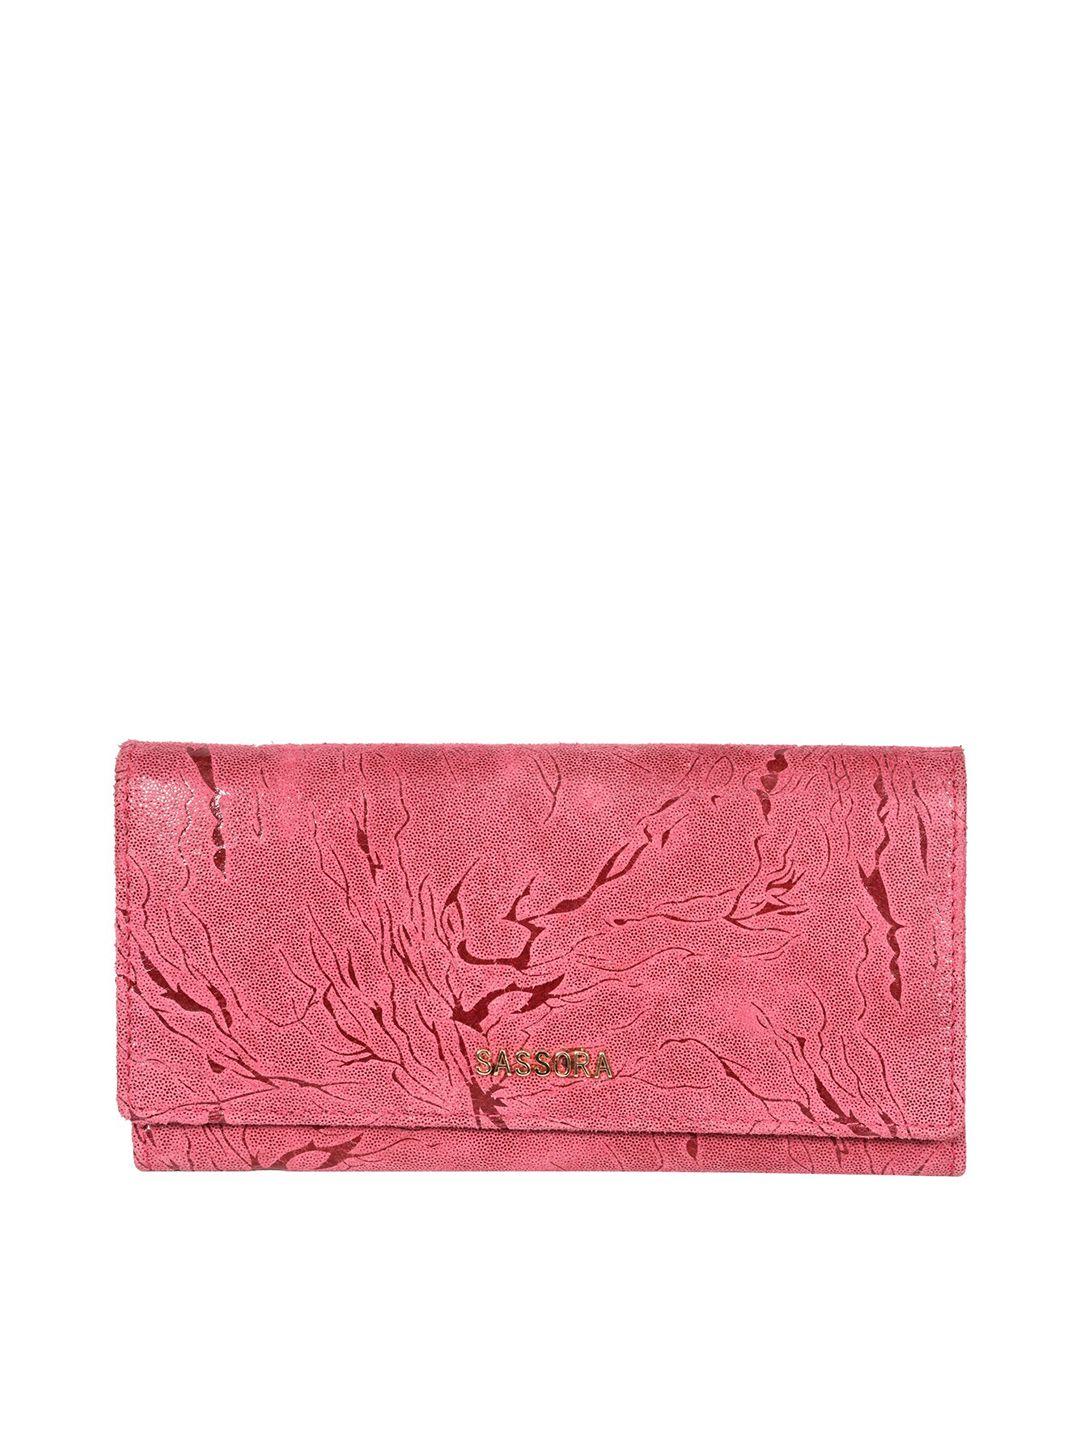 sassora women pink abstract printed leather envelope